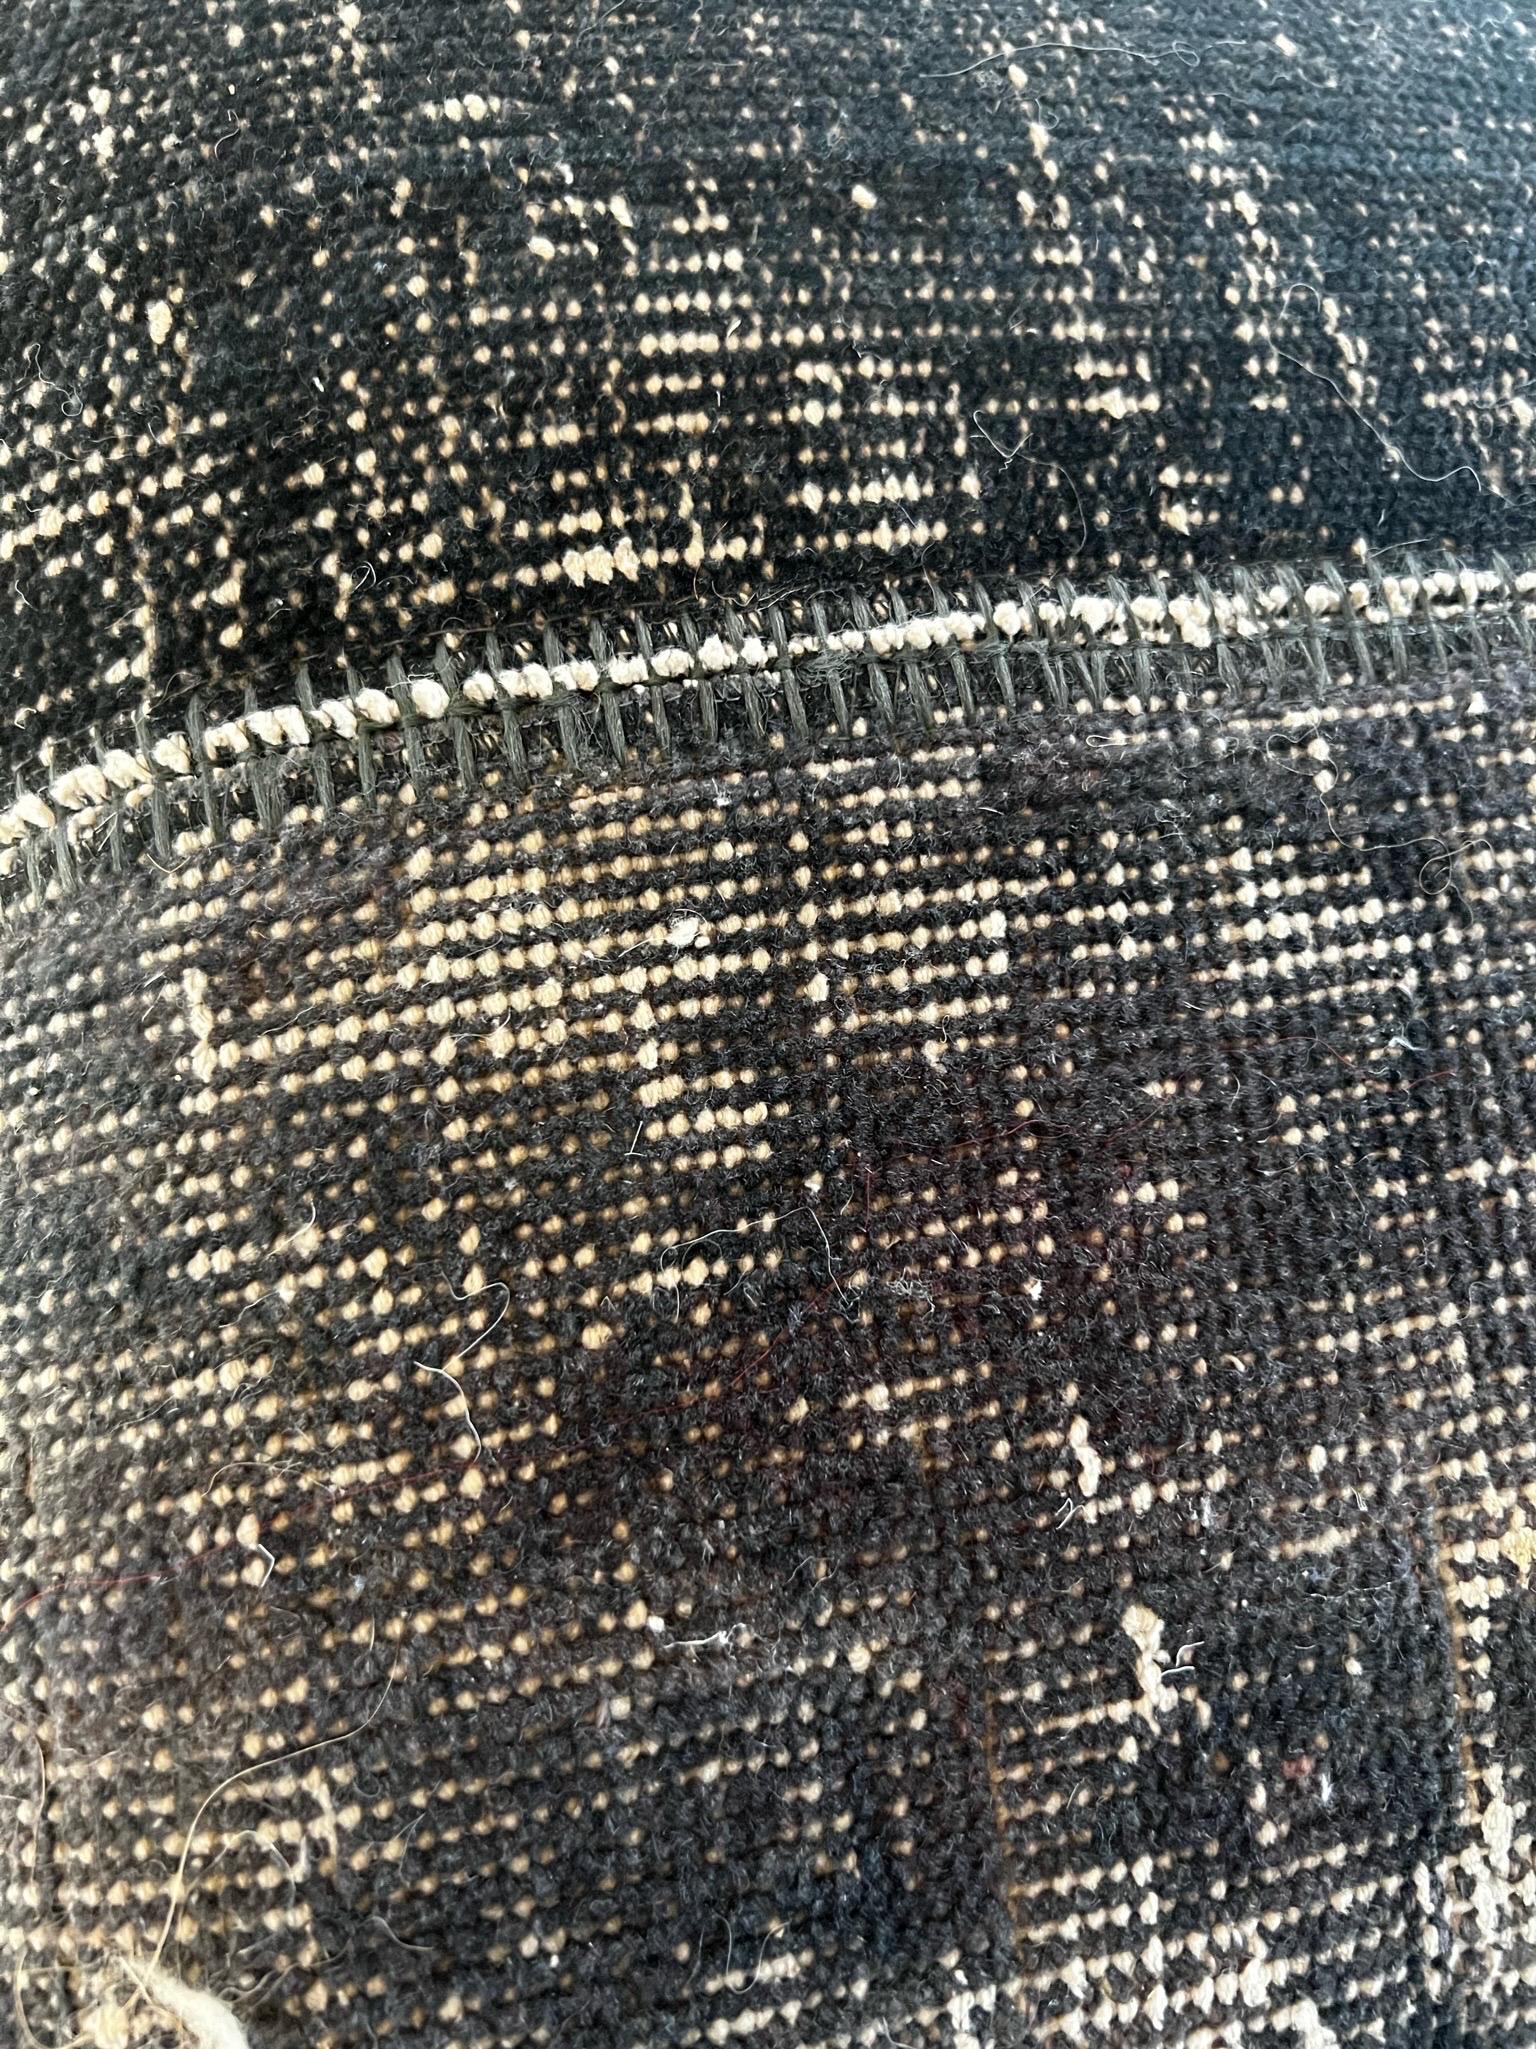 20th Century Antique Turkish Textile (black) Ottoman/Footstool/Pouf 